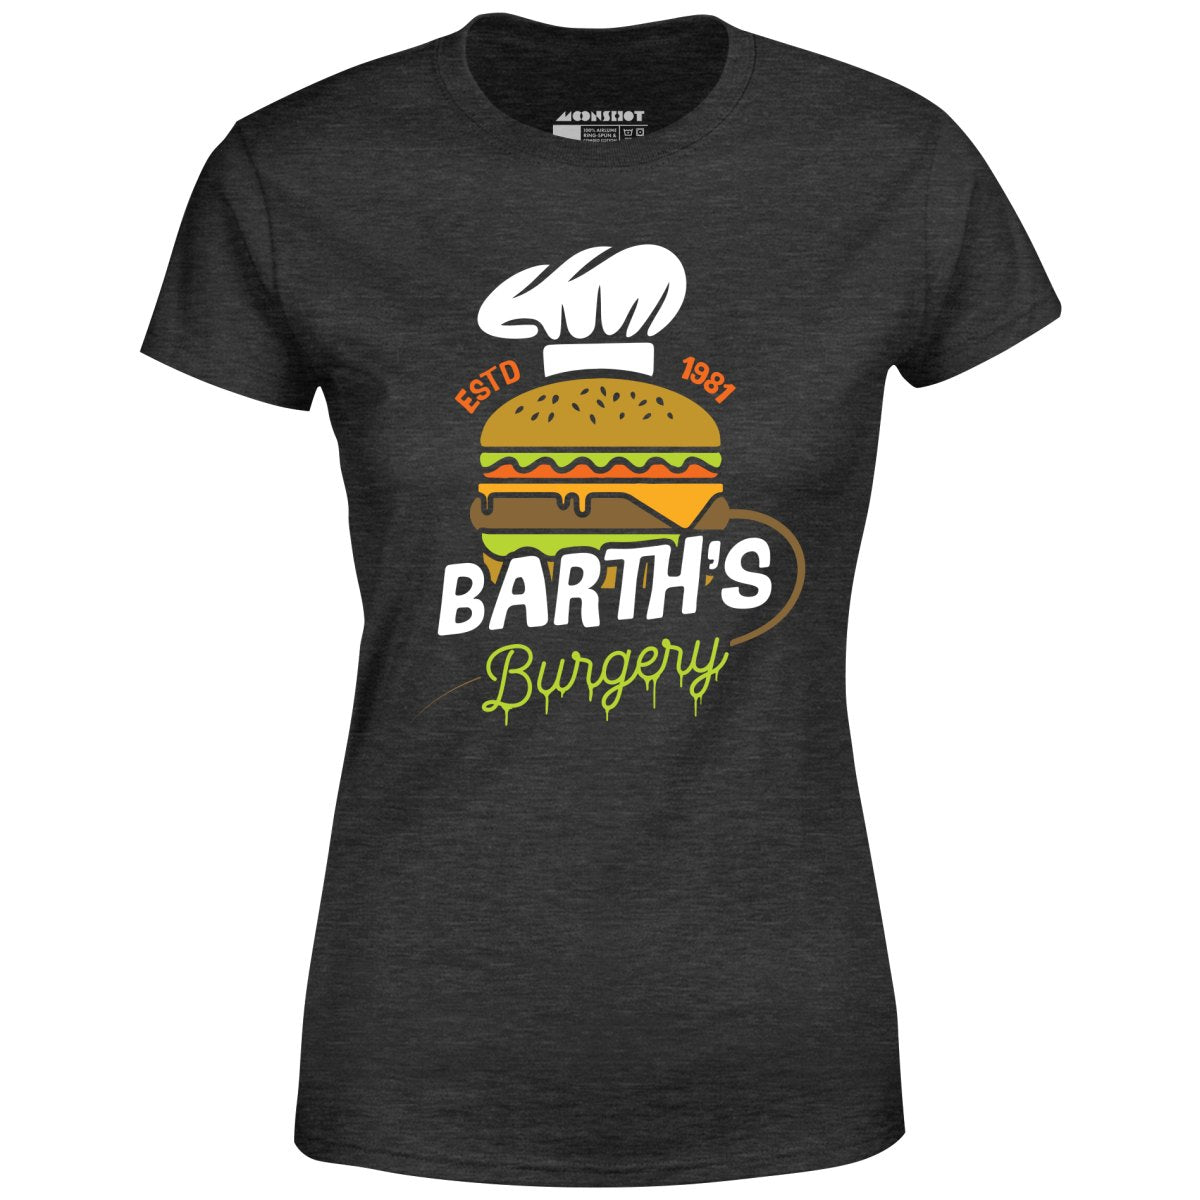 Barth's Burgery - Women's T-Shirt